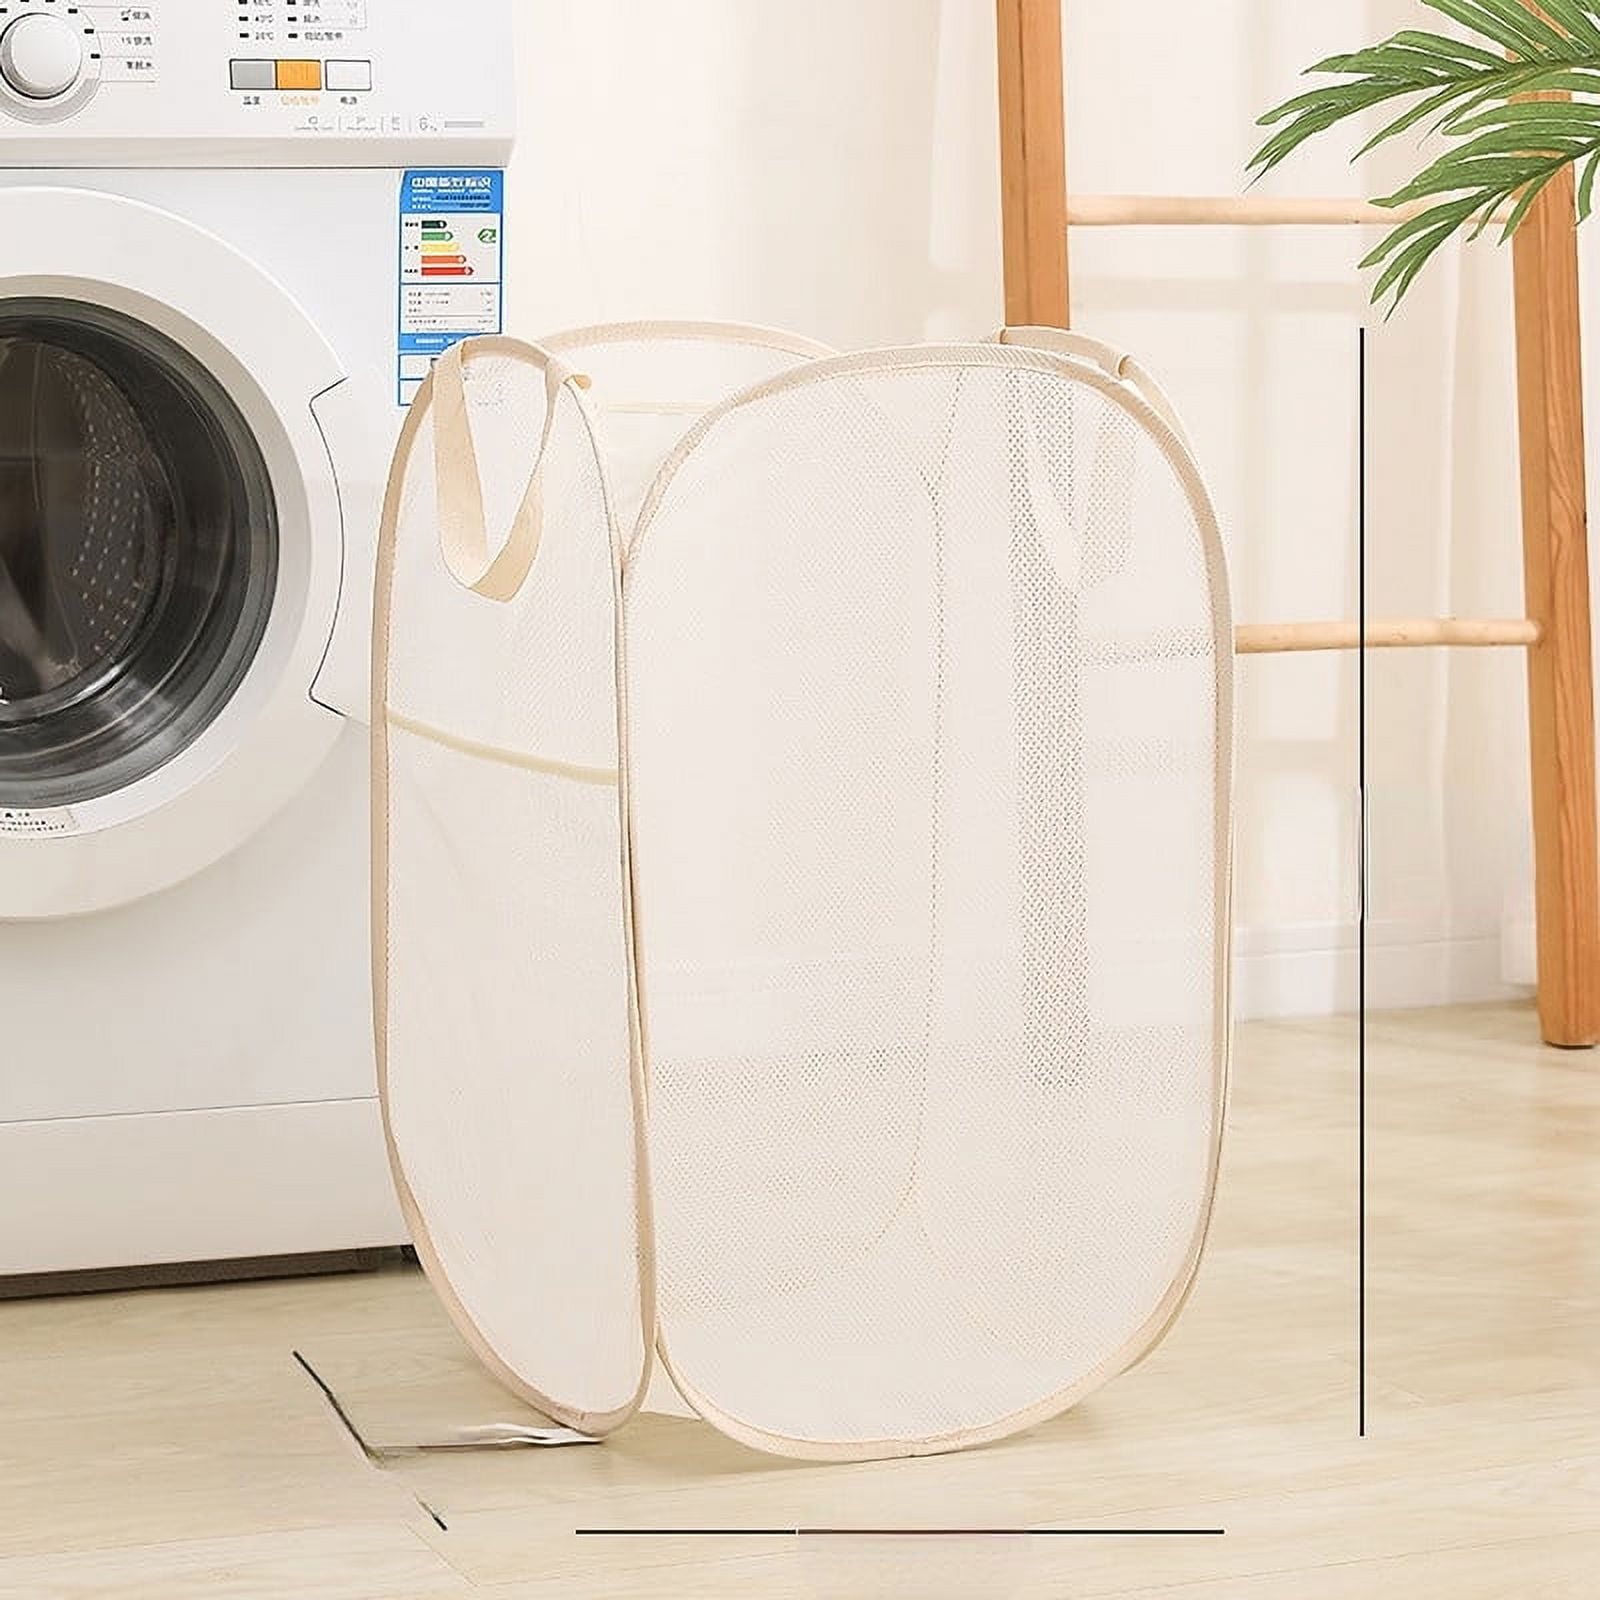 EBAIJQUO 77L Pop-Up Laundry Hamper (Dark Green)+Laundry Bag, Foldable Laundry Baskets, Collapsible Mesh Hamper for Laundry (Dark Green)